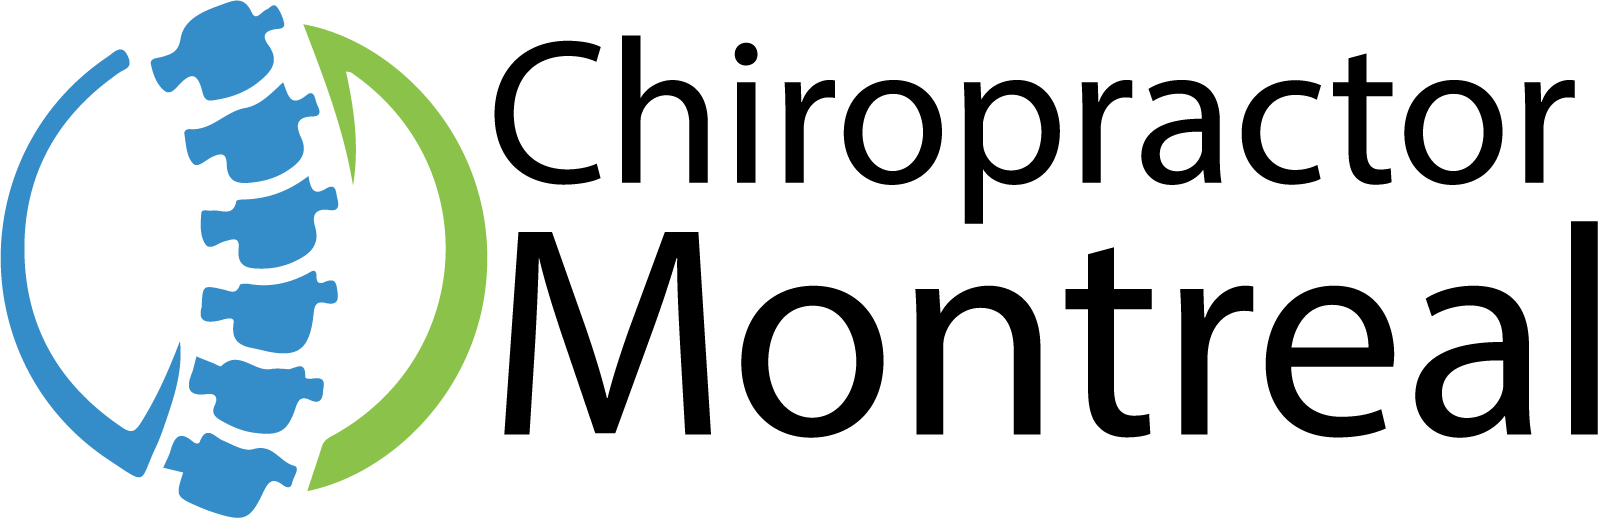 Chiropractor Montreal